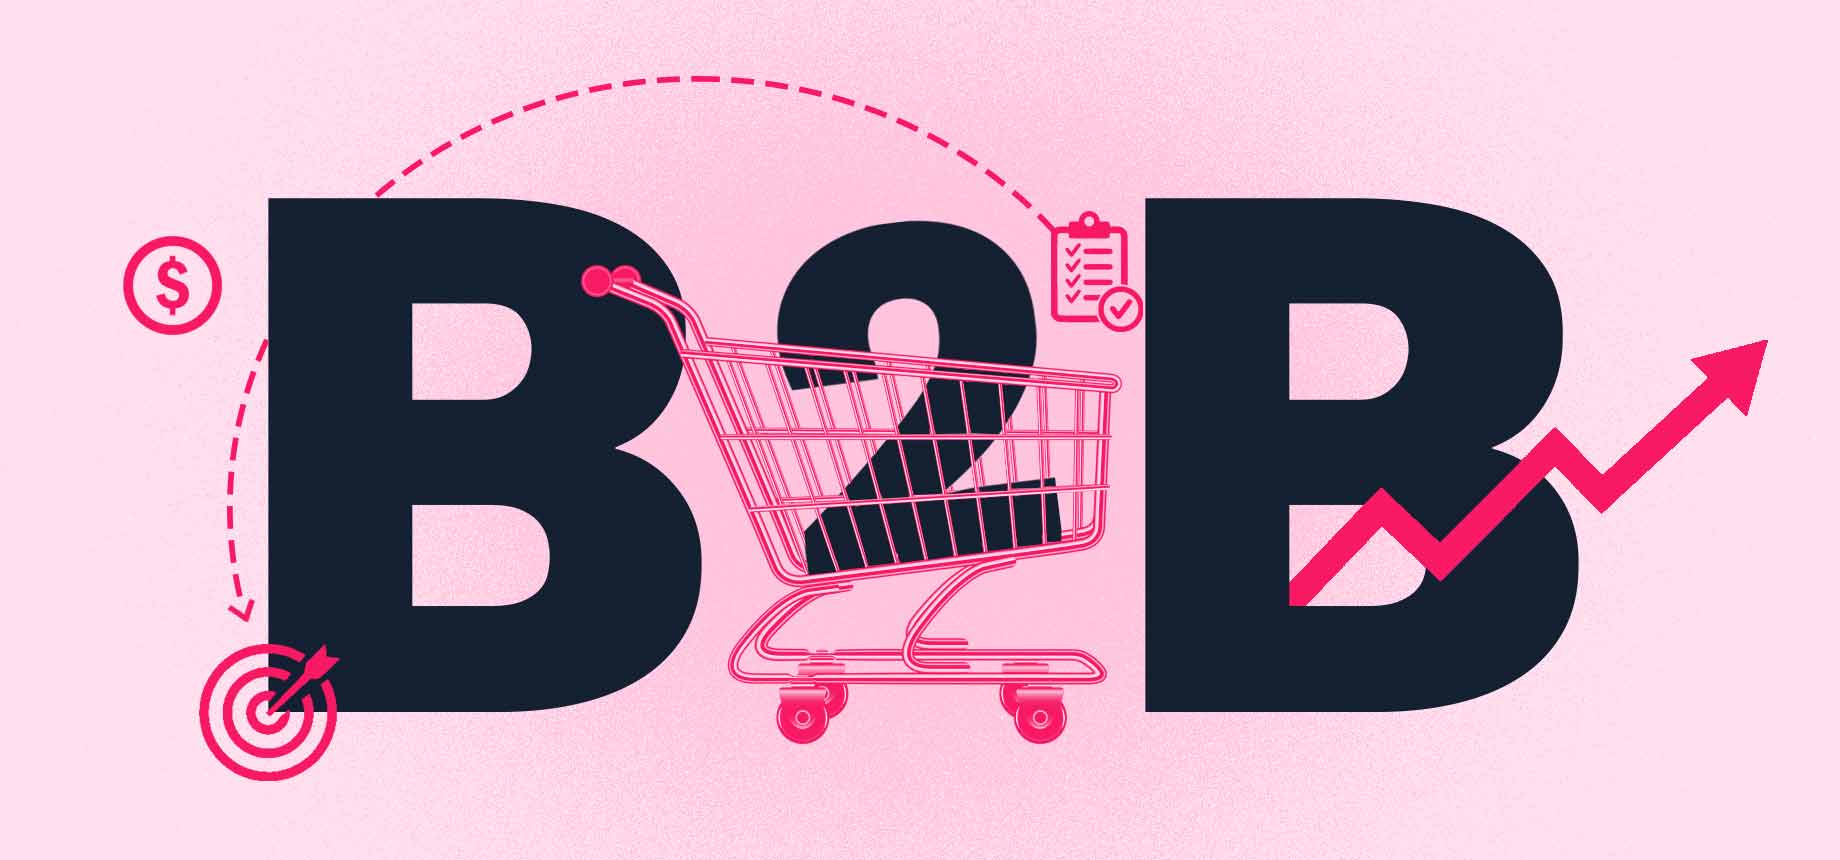 B2B e commerce definition
